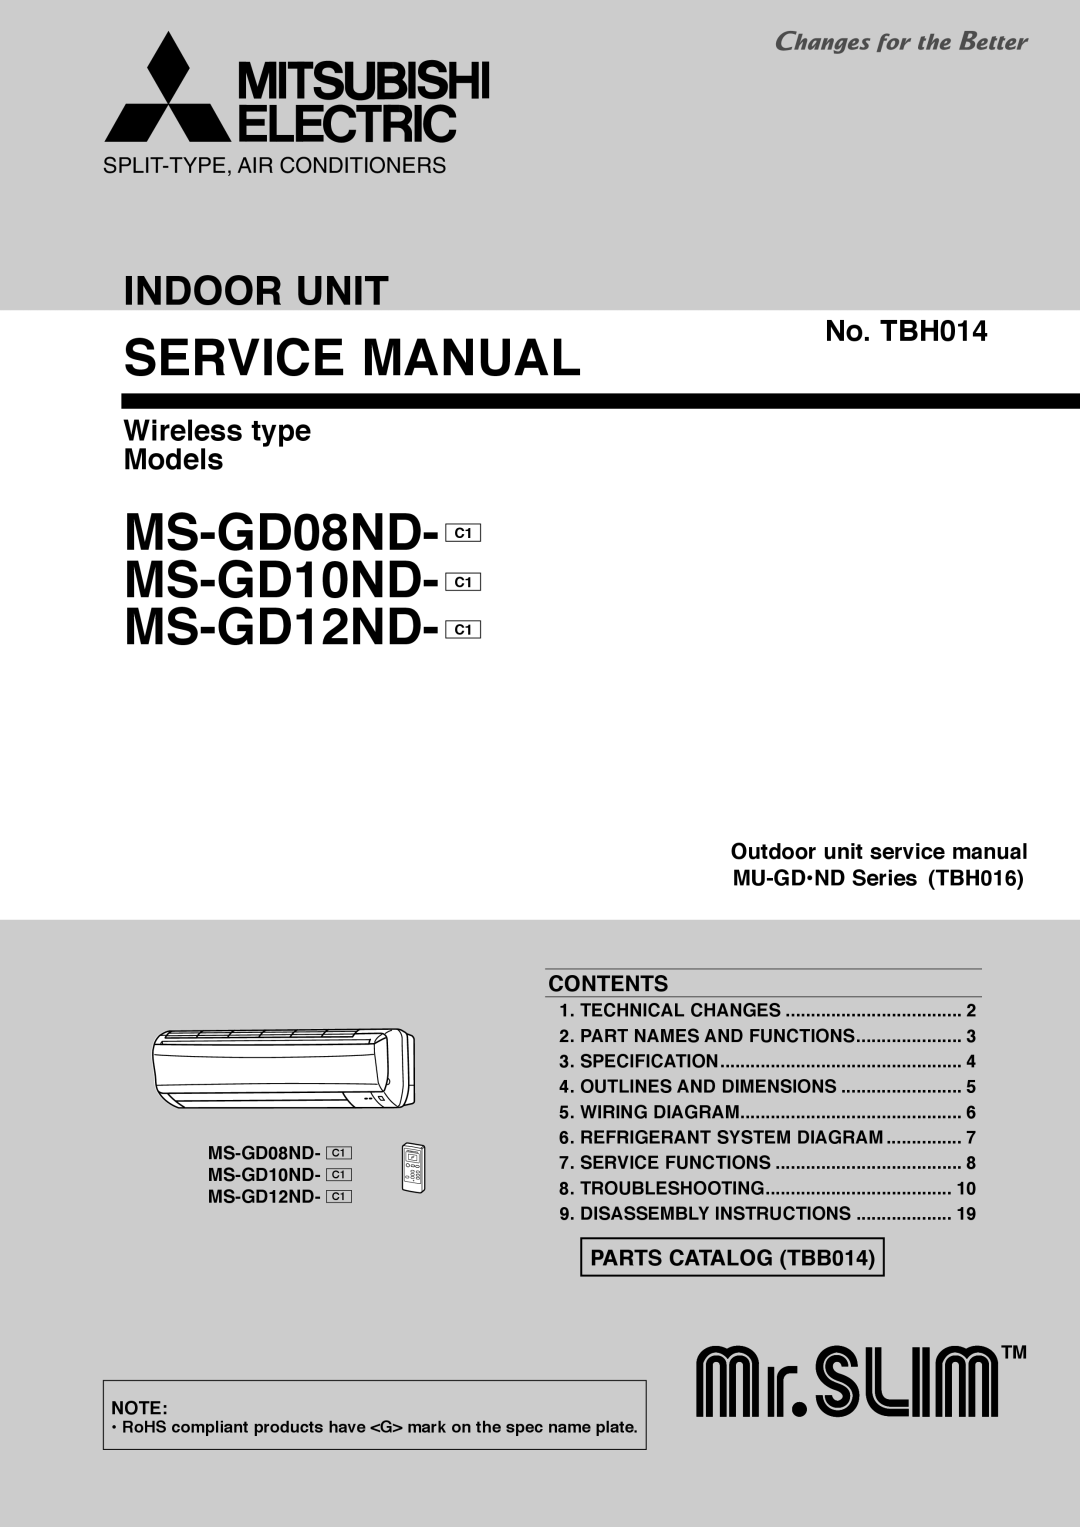 Mitsubishi Electronics MS-GD08ND-ci service manual Contents, Parts Catalog TBB014 